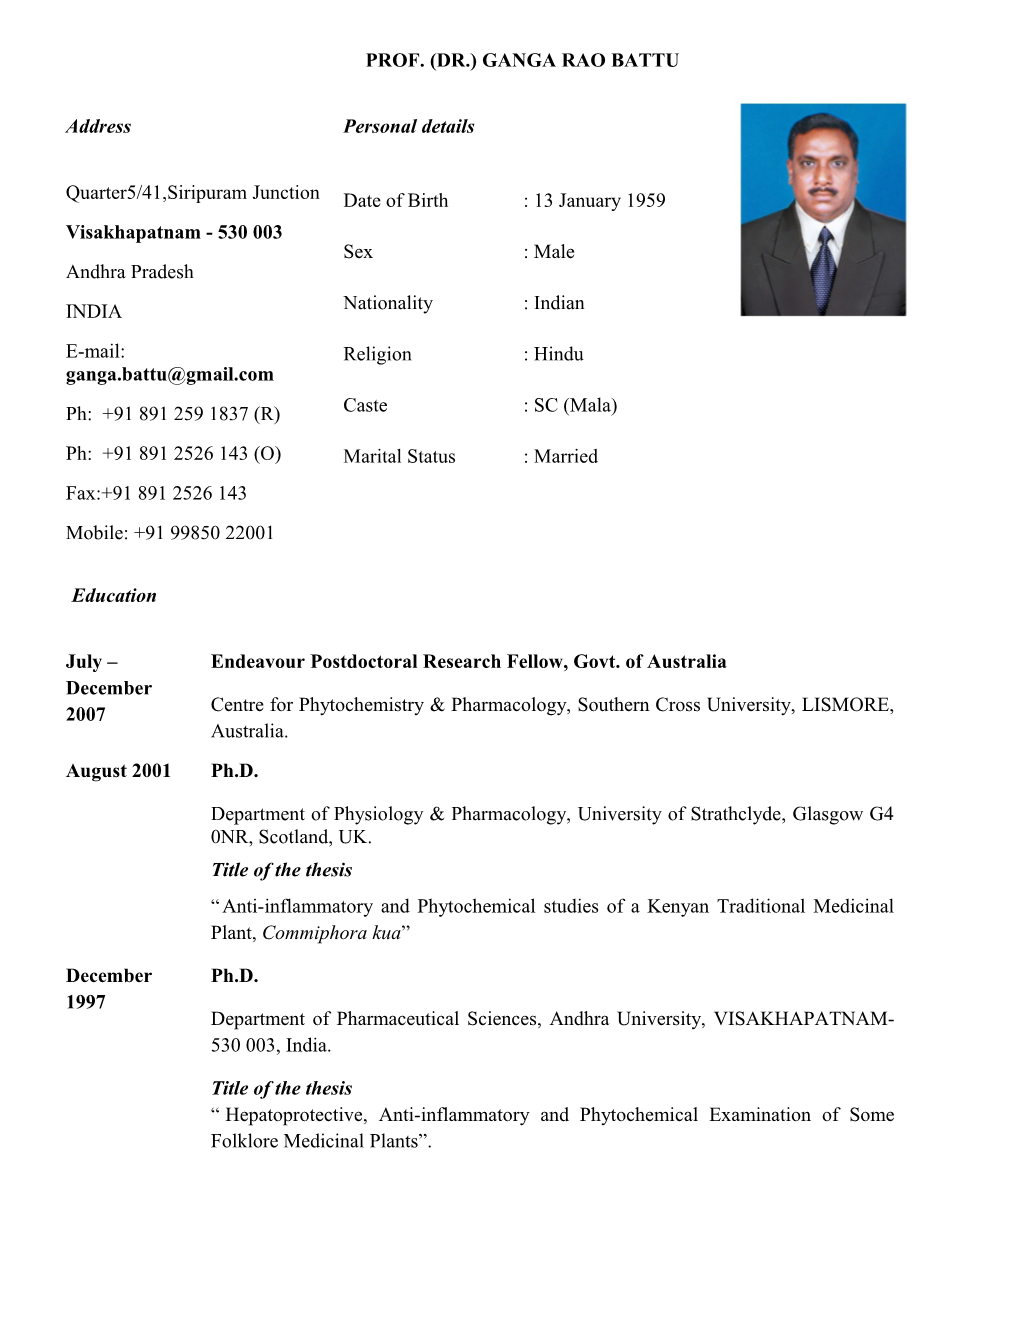 Prof. (Dr.) Ganga Rao Battu